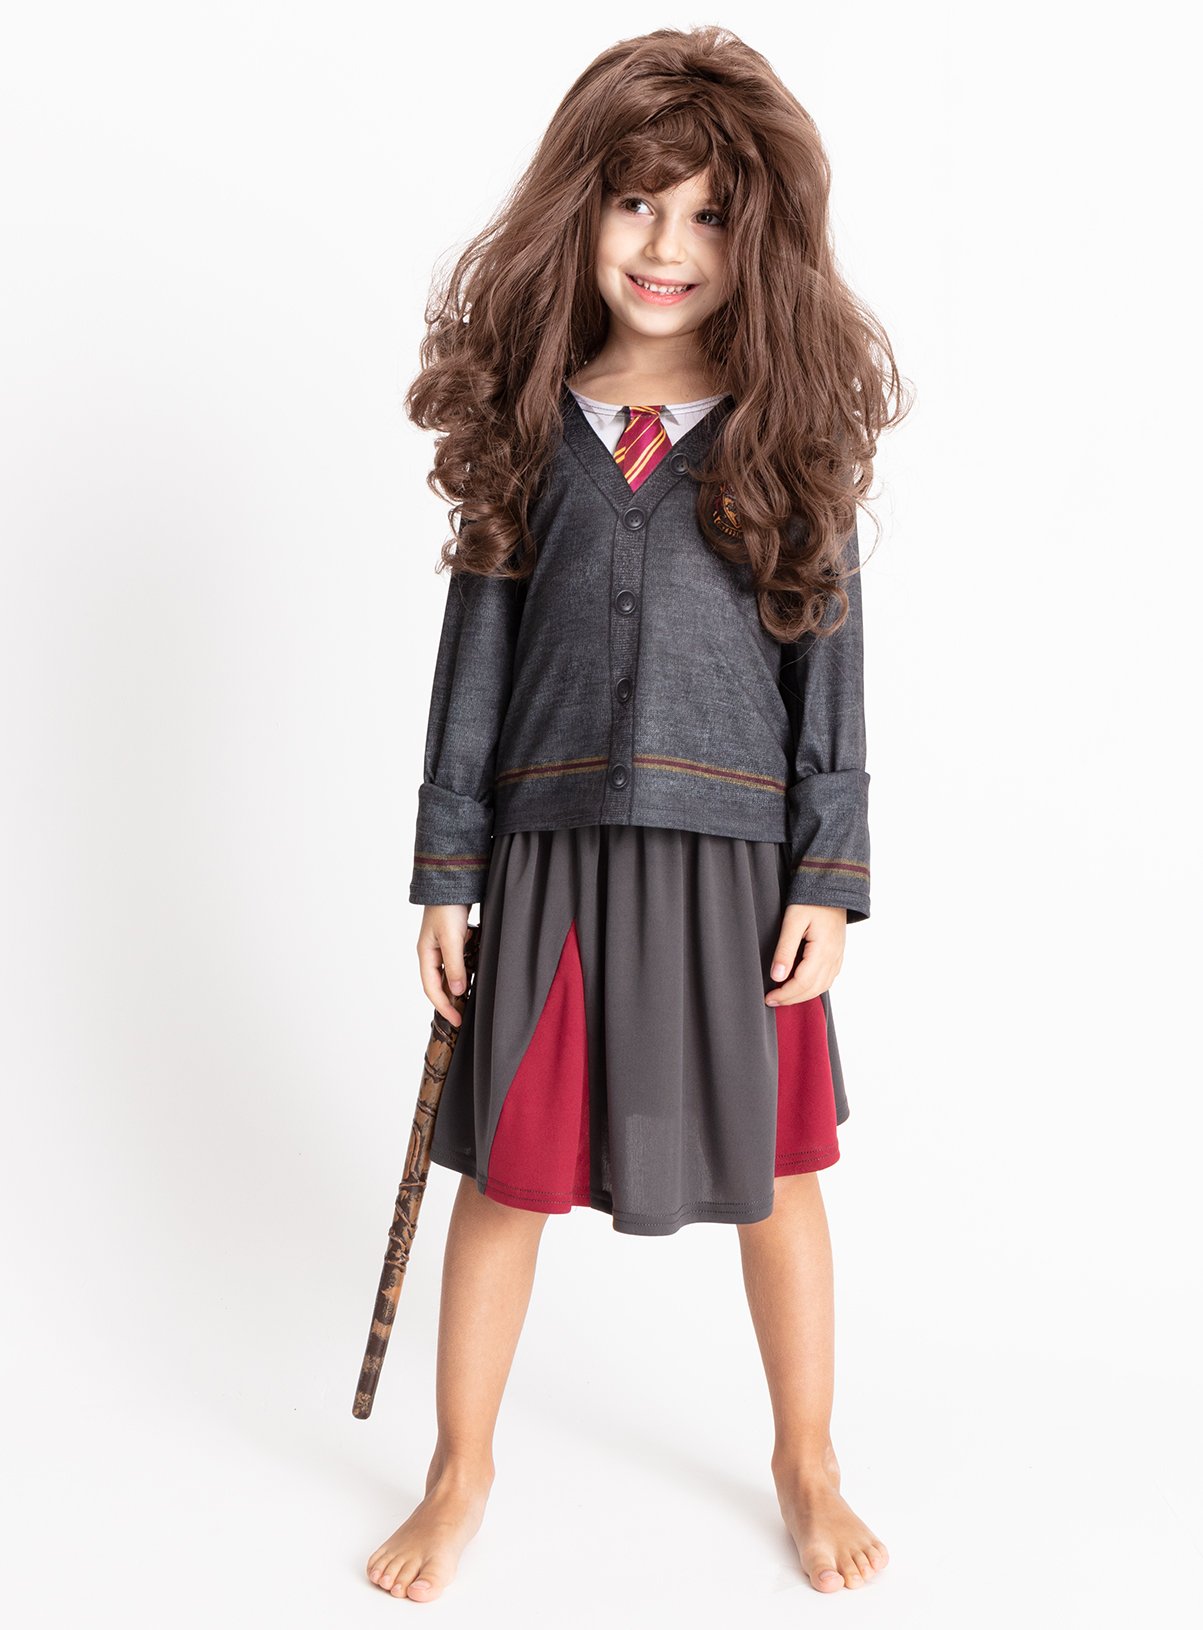 Buy Harry Potter Hermione Costume - 5-6 